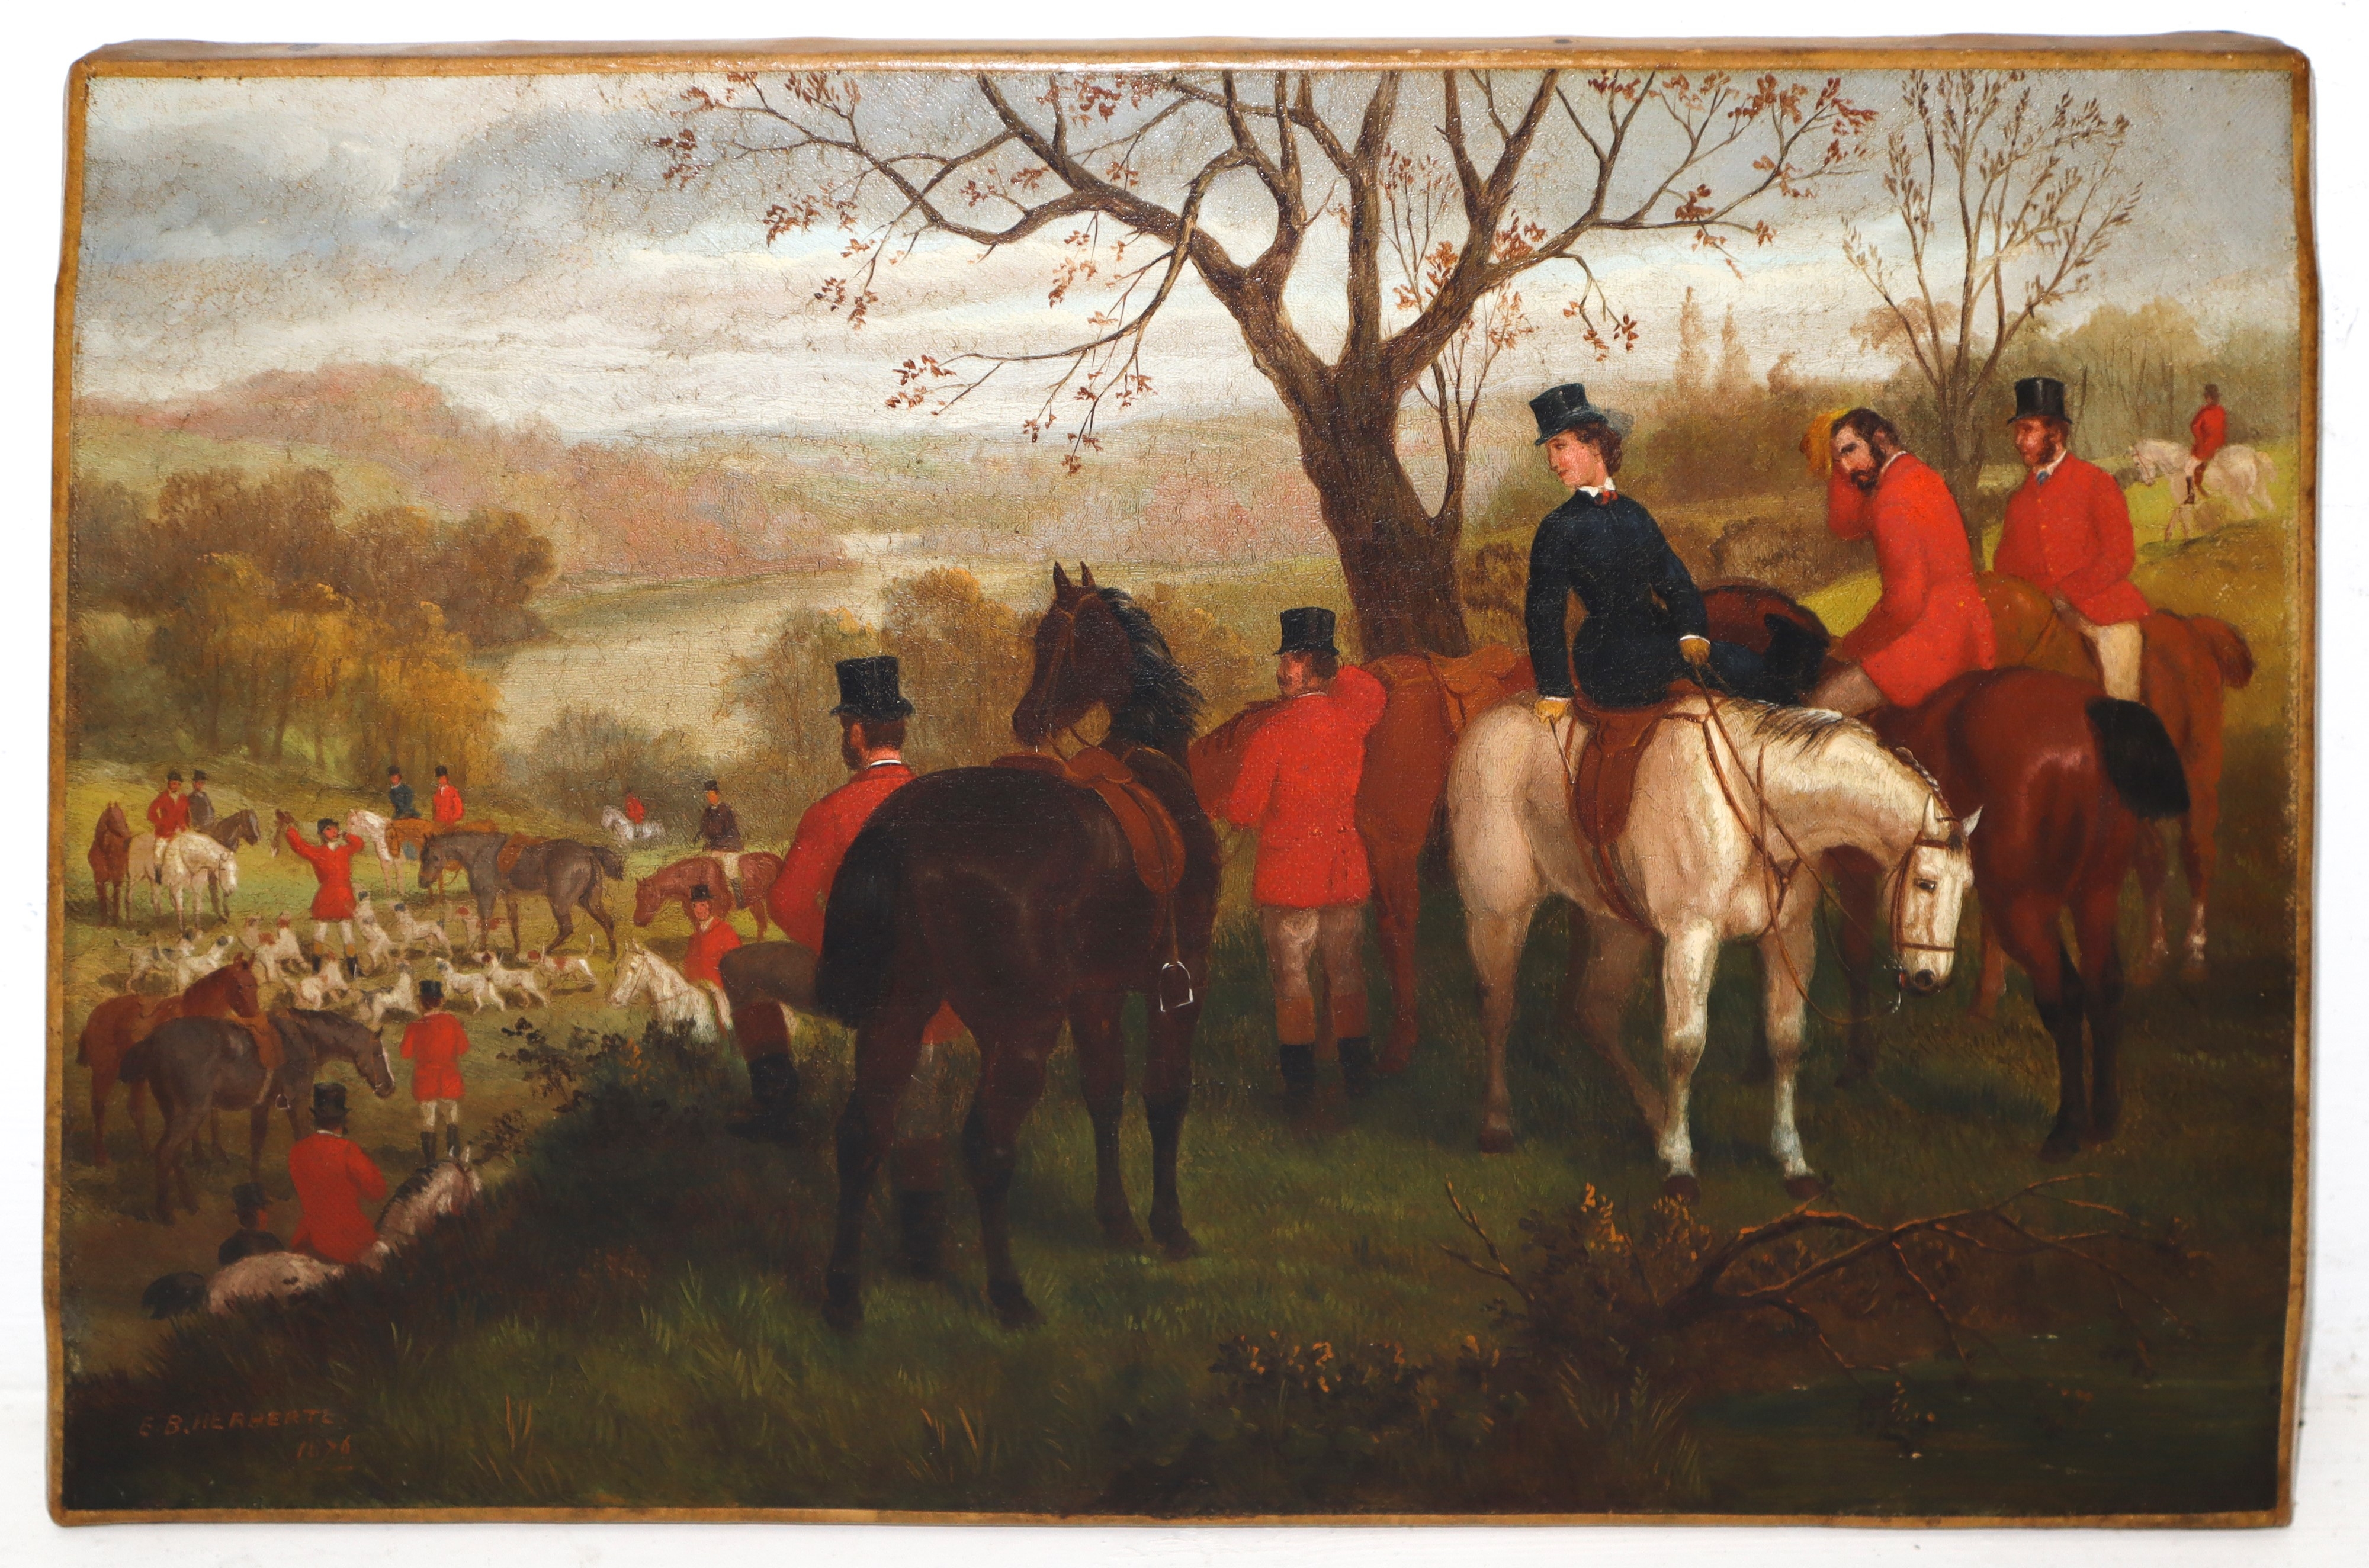 Edward Benjamin Herberte | Fox hunting scene with rider and pack